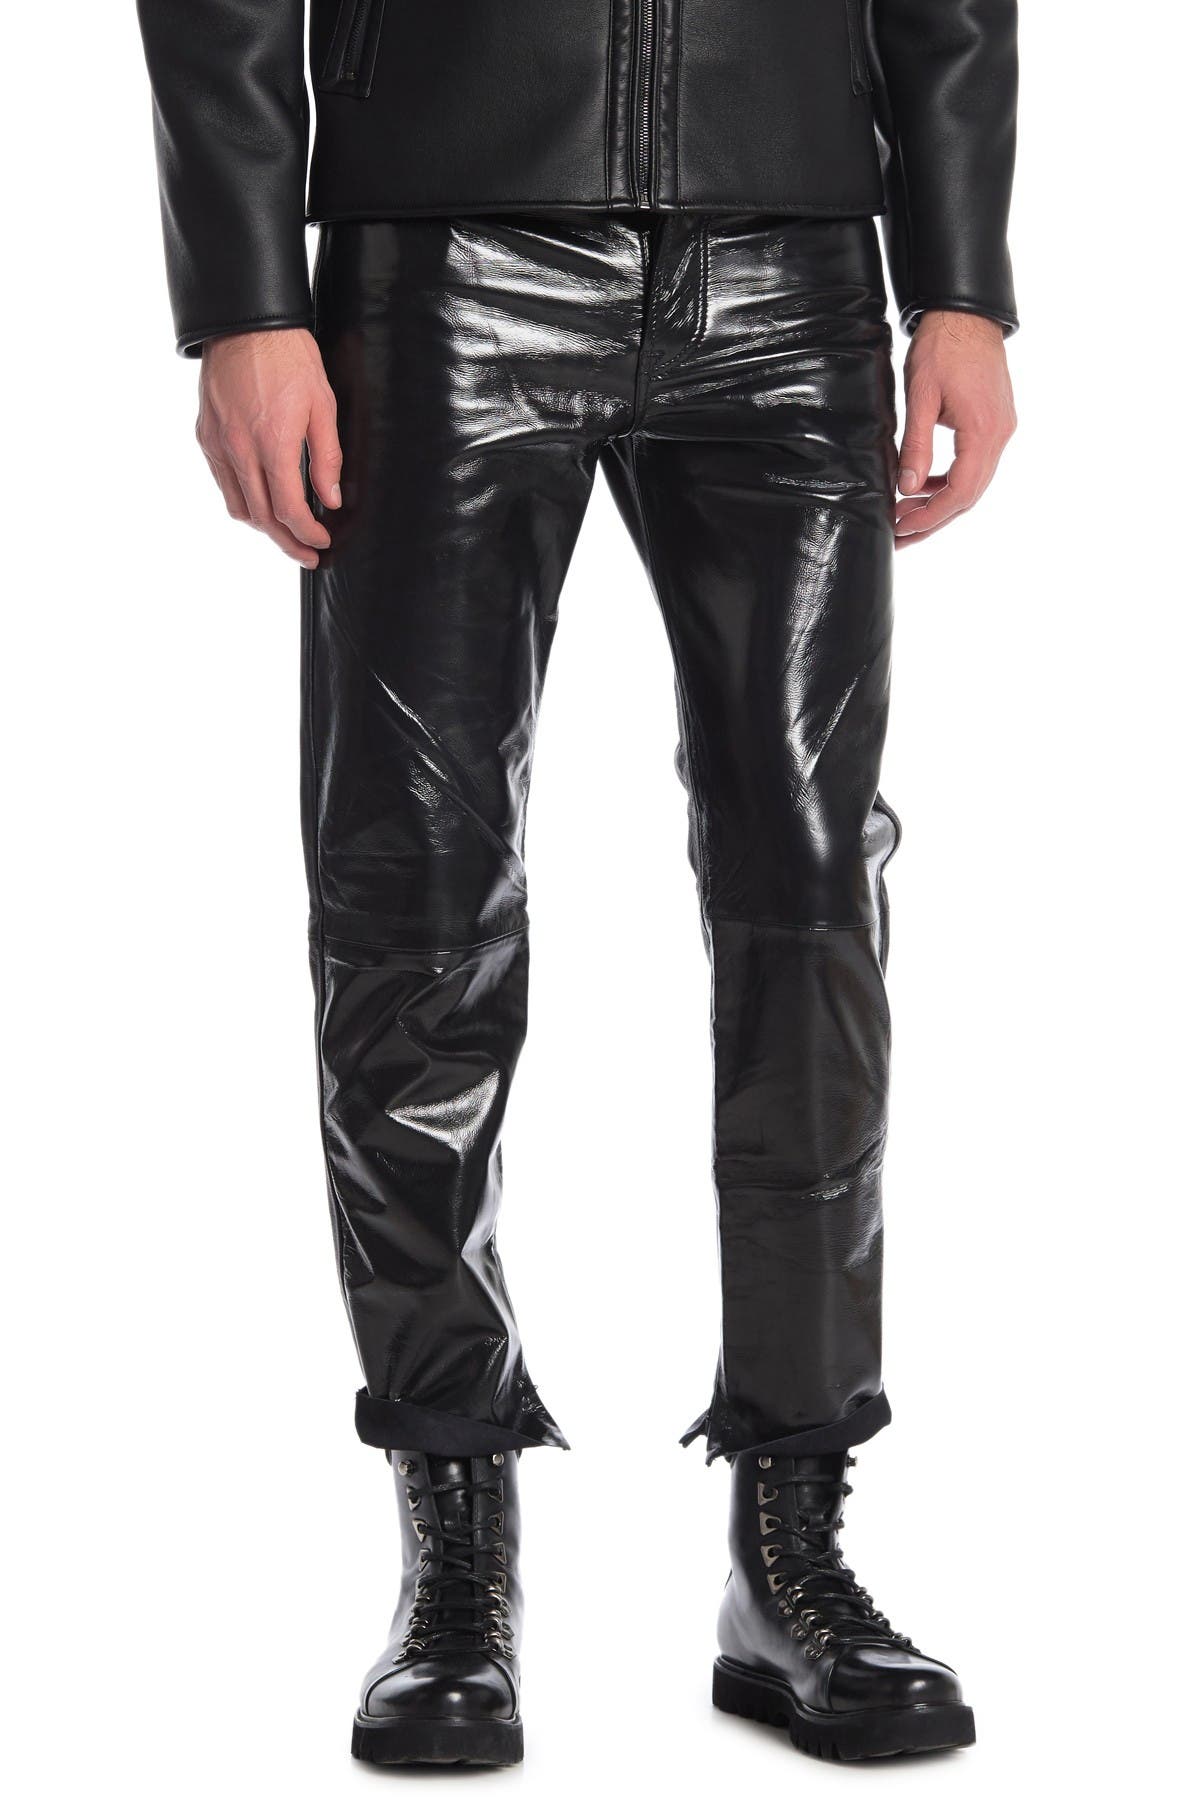 nordstrom rack leather pants